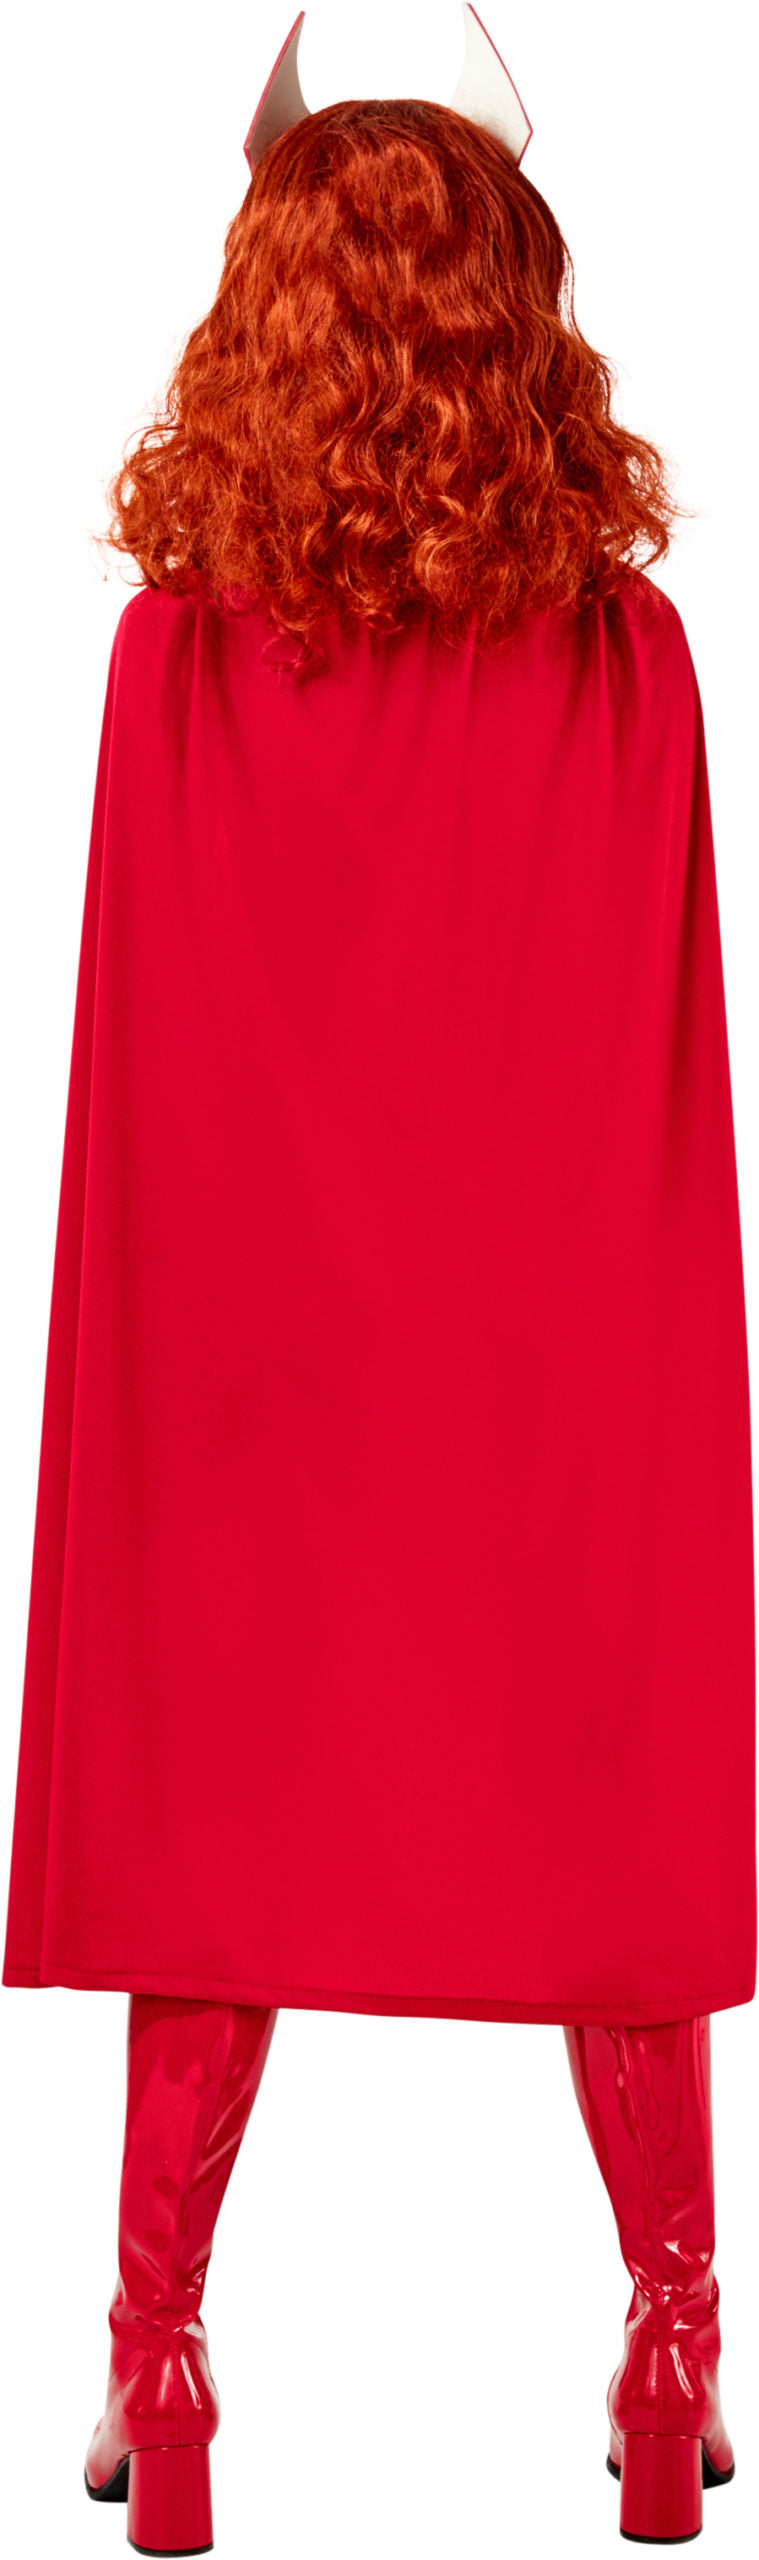 Wanda Costume Scarlet Witch Classic WandaVision Red Dress_4